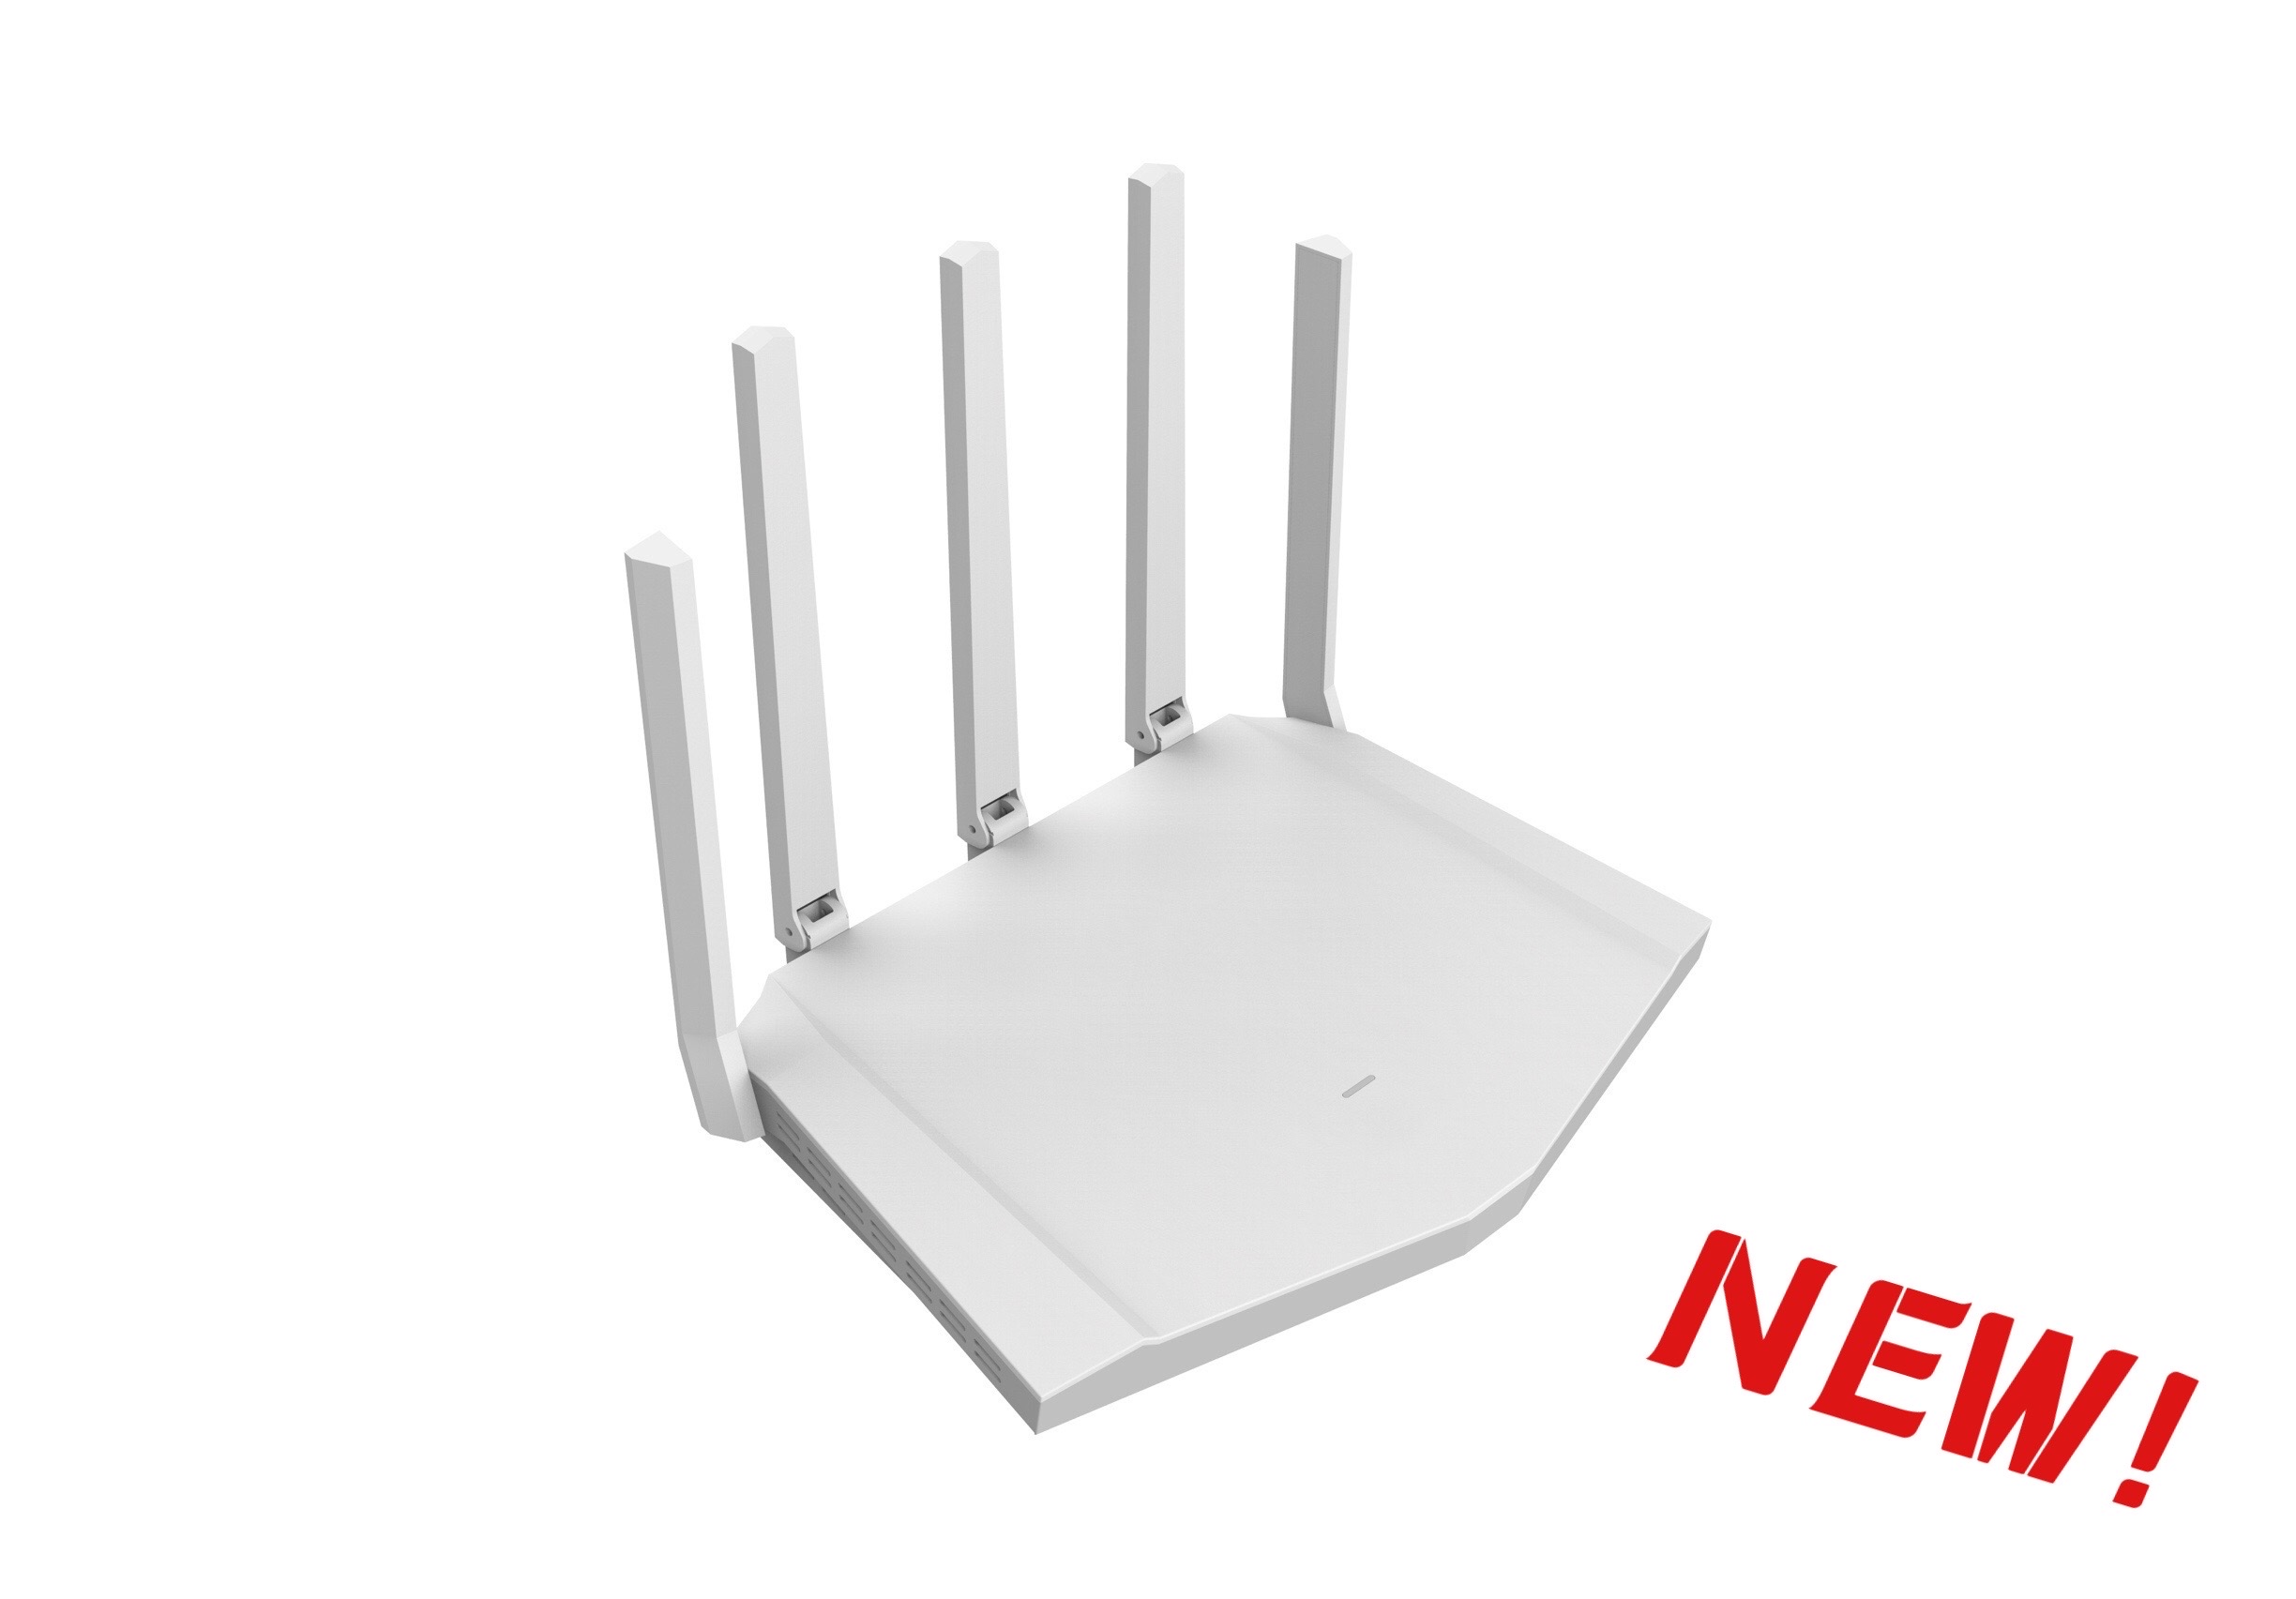 TJQ30 AX3000M Full Gigabit WIFI 6 Router Smart Home Router